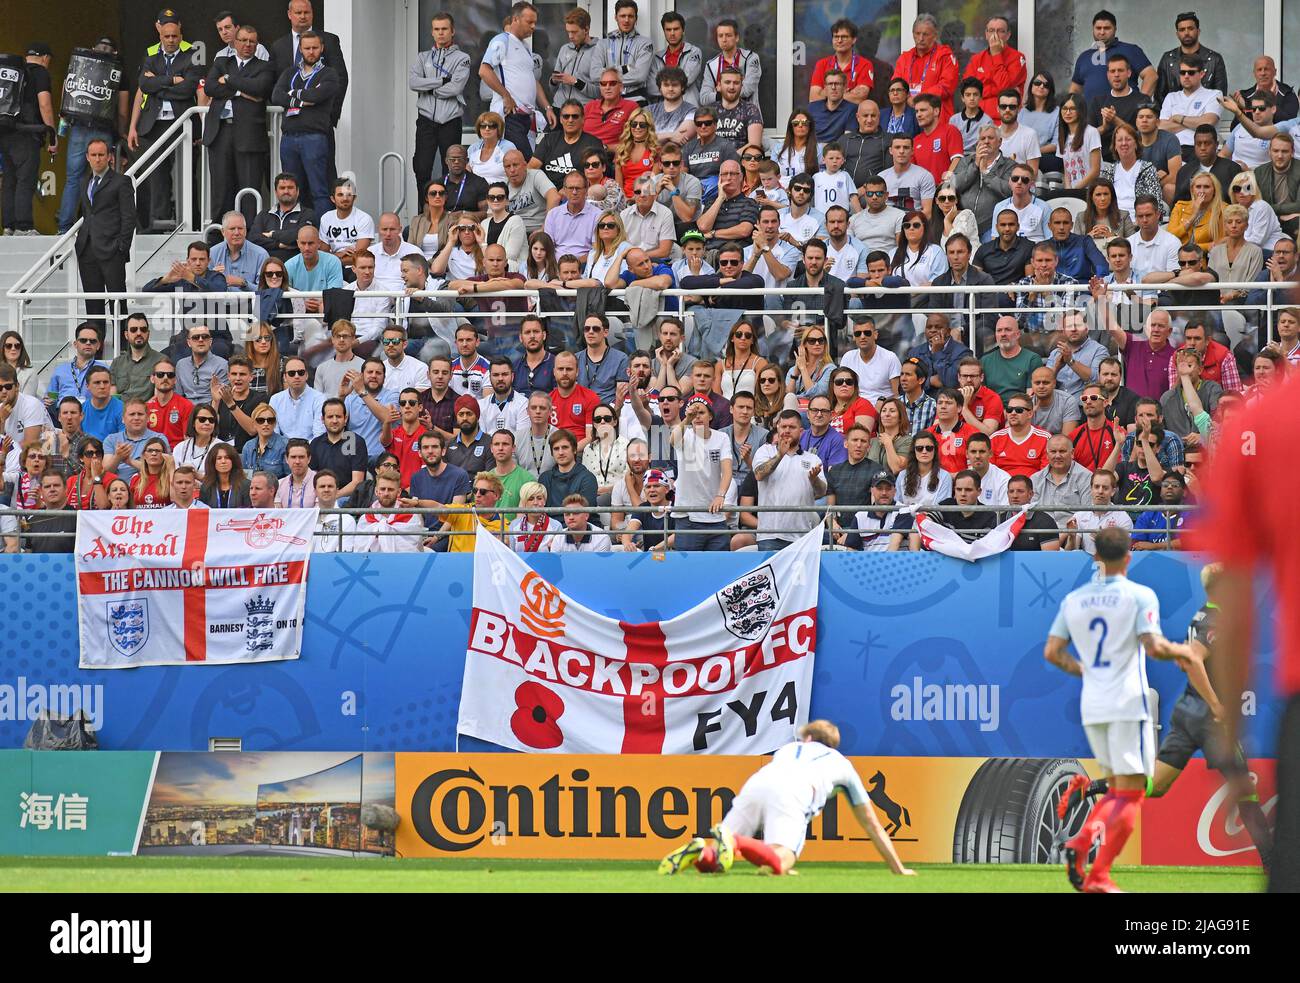 Banner during football match between fotografías e imágenes de alta  resolución - Página 5 - Alamy